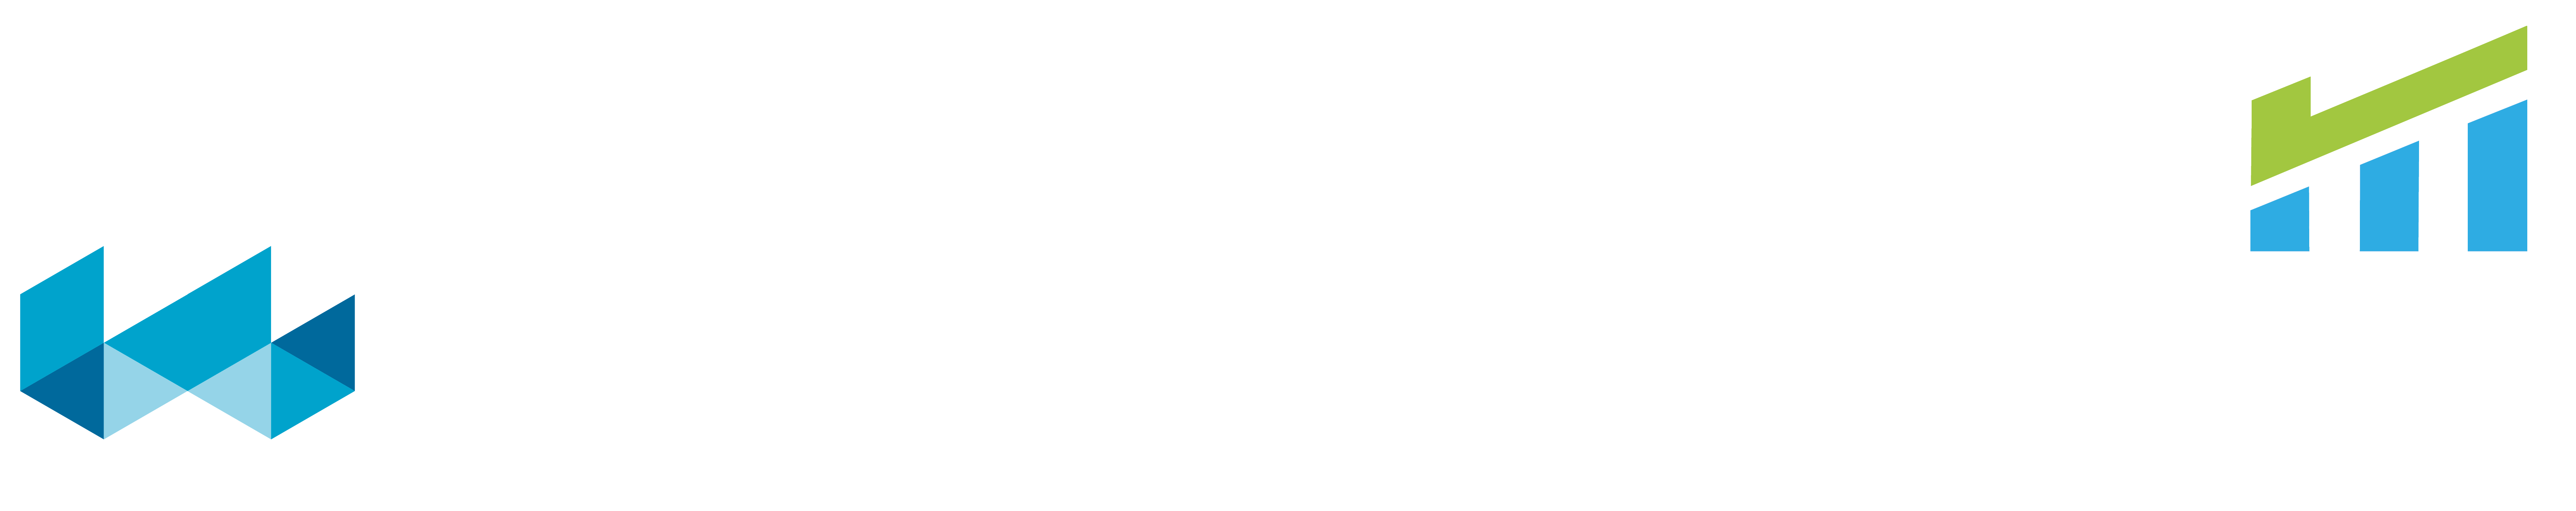 Mercer-Mettl_Core logo_Reverse-2